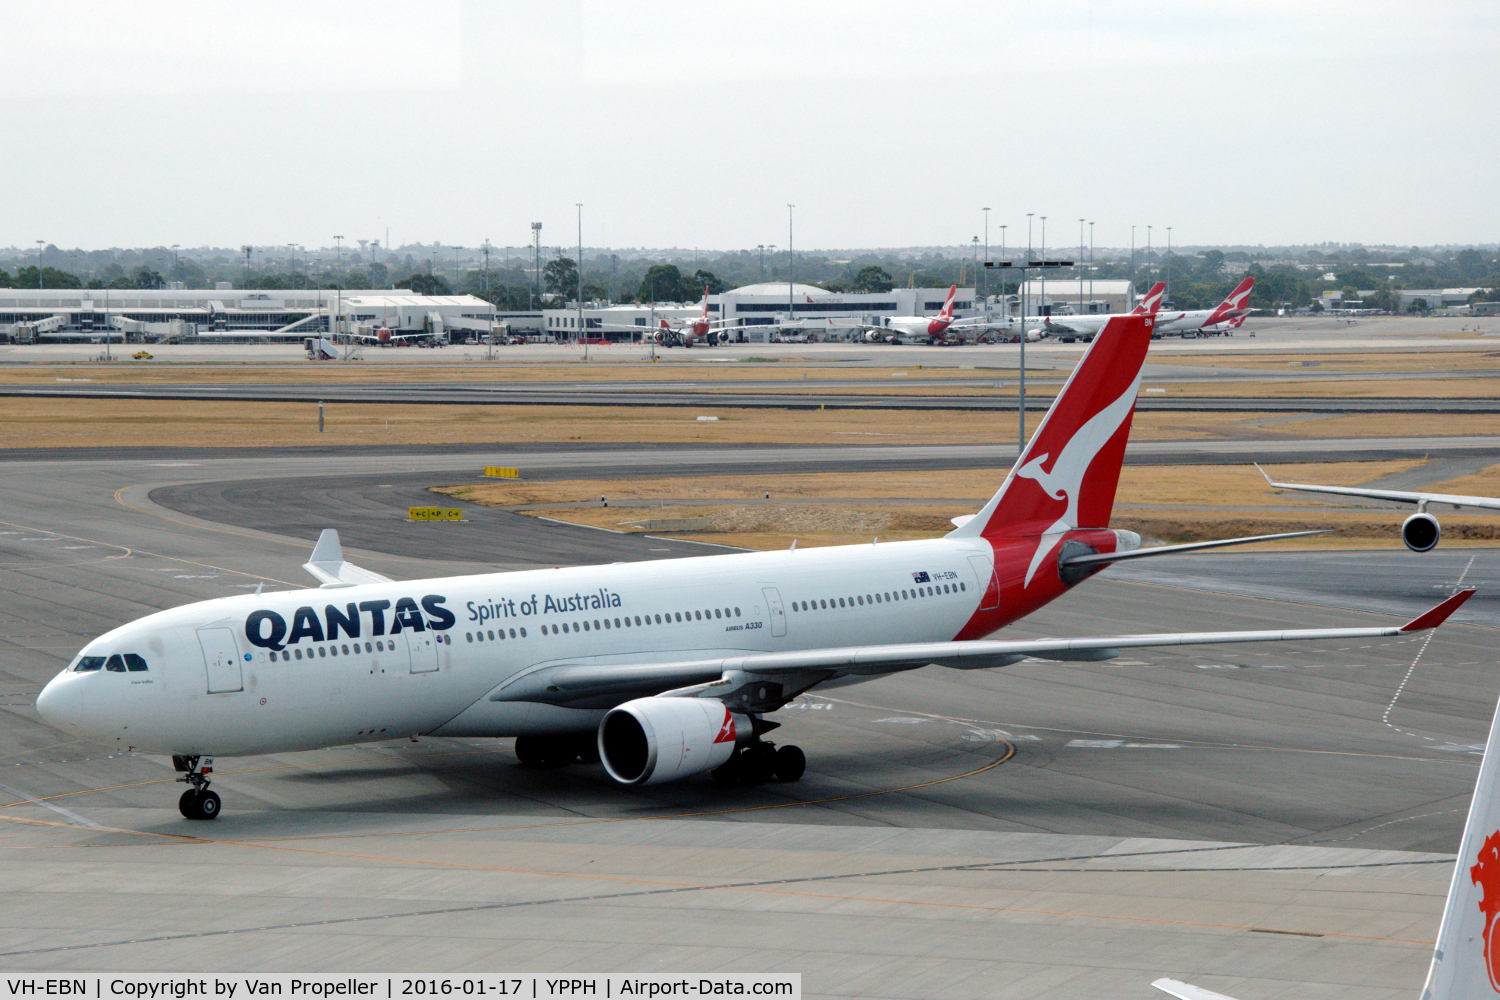 VH-EBN, 2010 Airbus A330-202 C/N 1094, Airbus A330-202 of Qantas taxying towards its gate at Perth airport, Western Australia